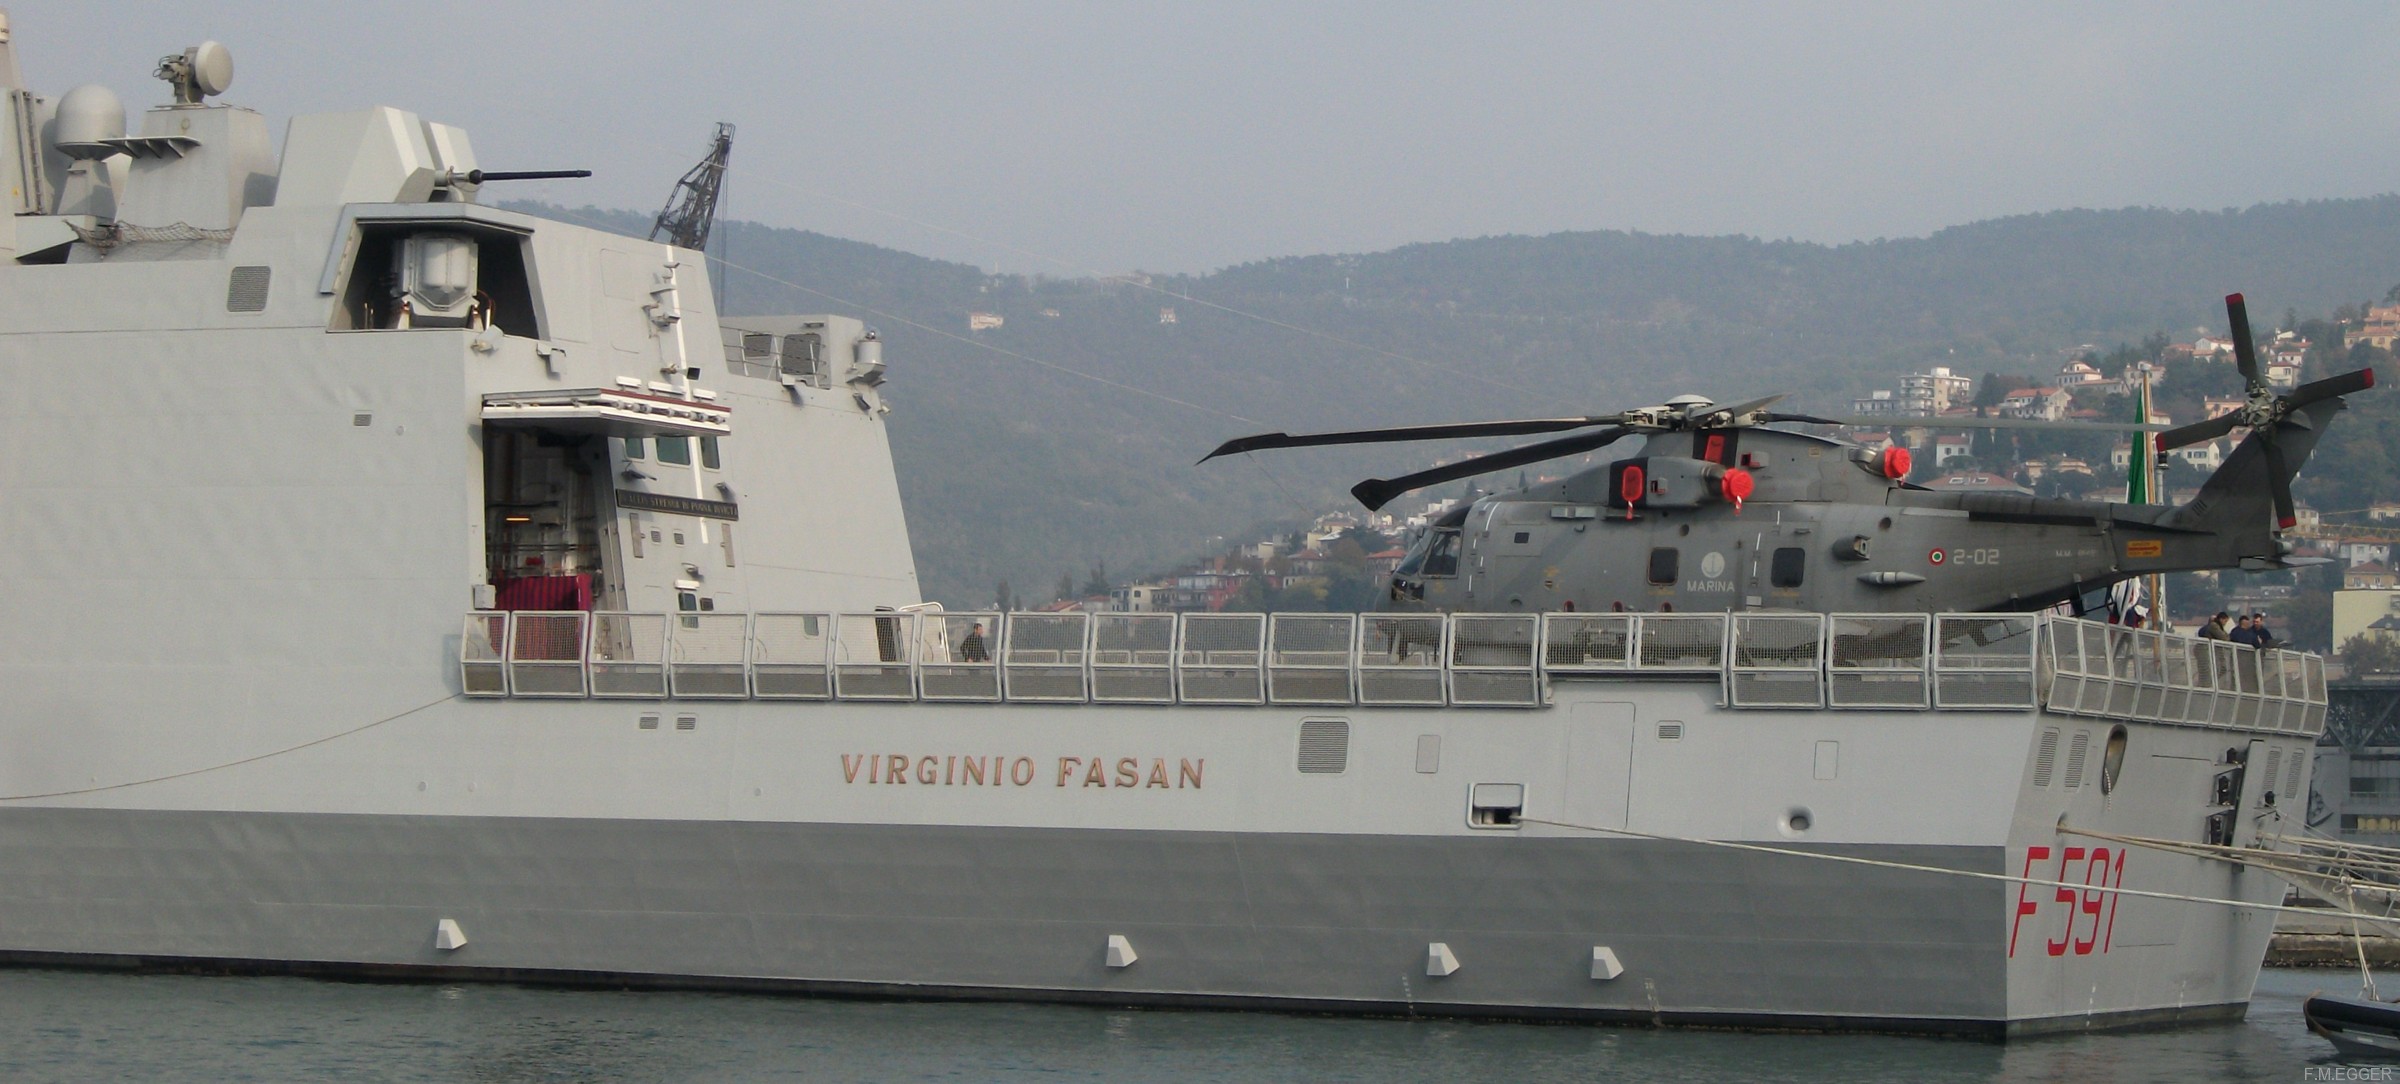 f-591 virginio fasan its nave bergamini fremm class guided missile frigate italian navy marina militare x11 trieste port